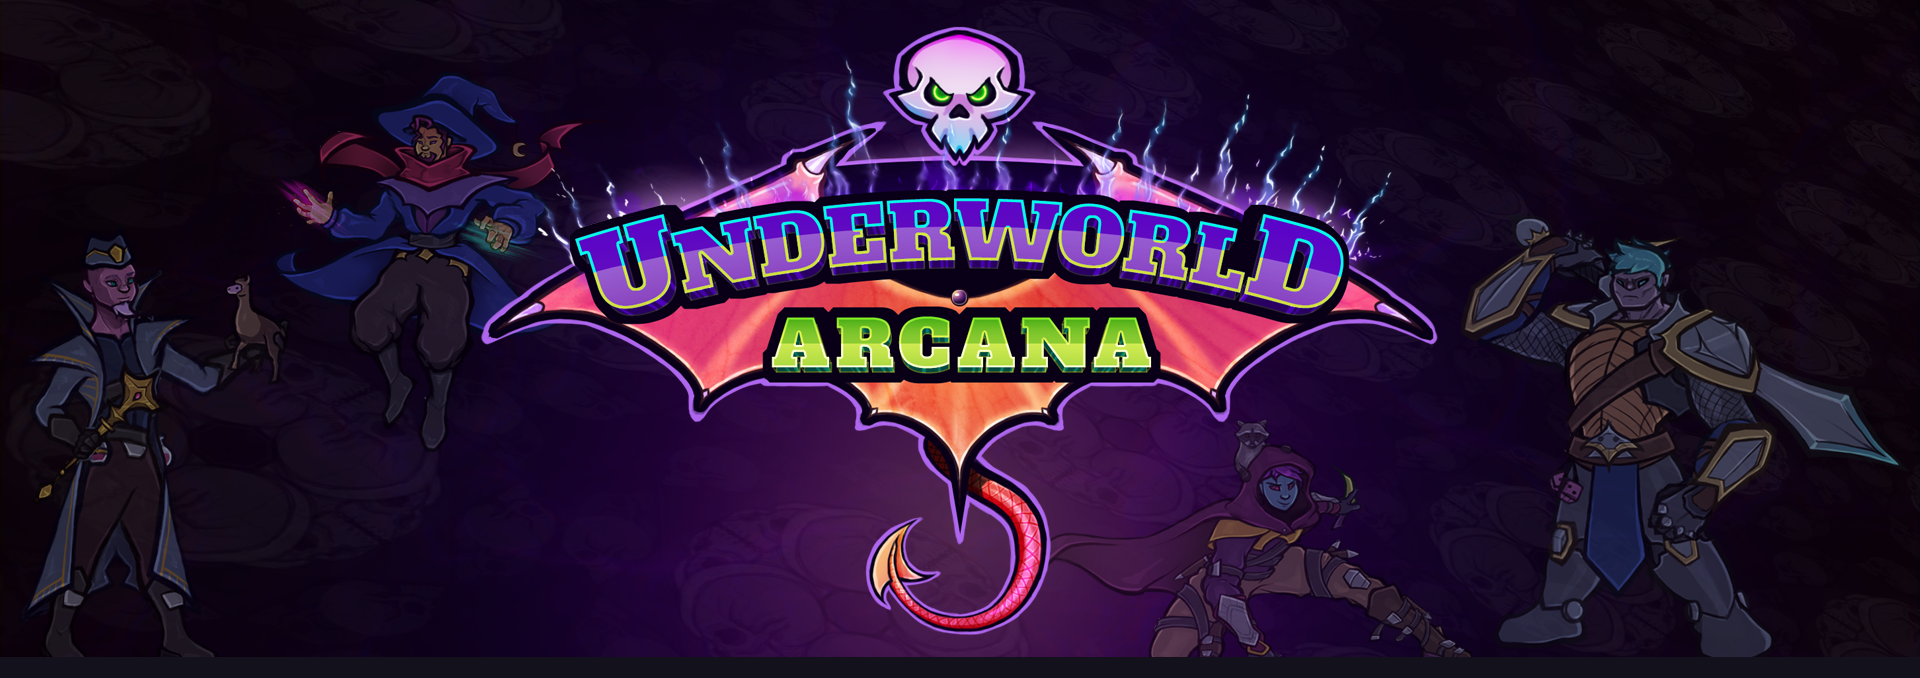 Underworld Arcana - Print and Play Version